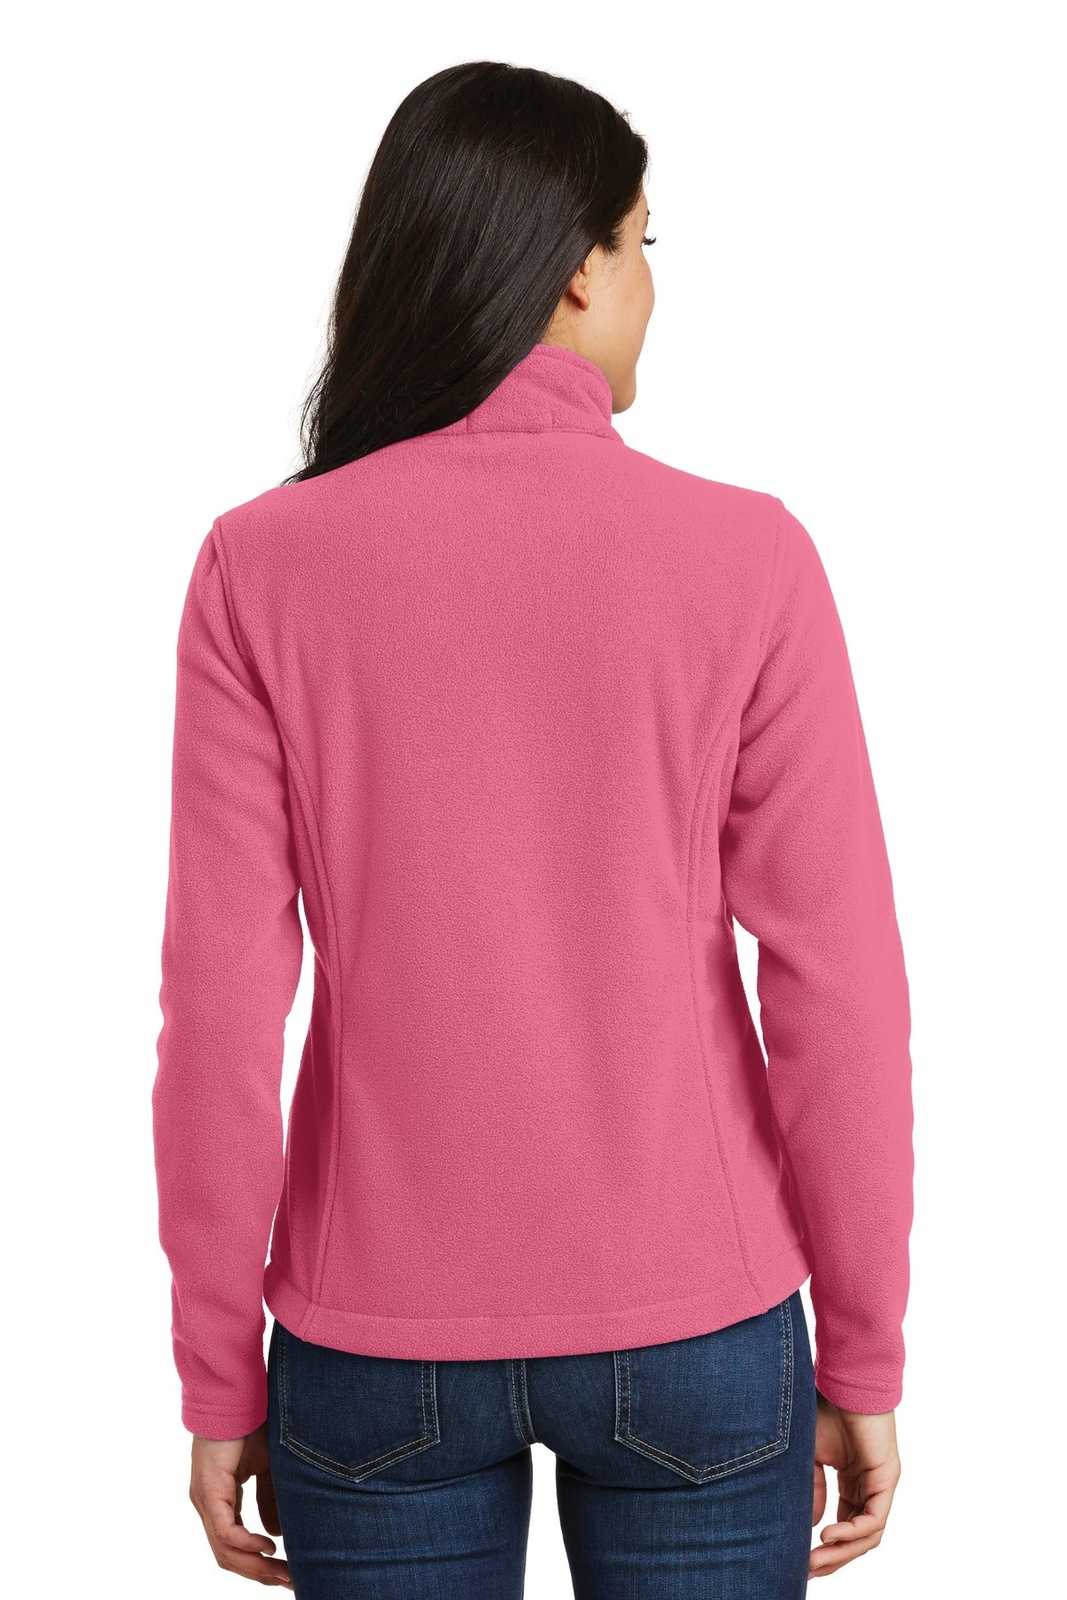 Port Authority L217 Ladies Value Fleece Jacket - Pink Blossom - HIT a Double - 1